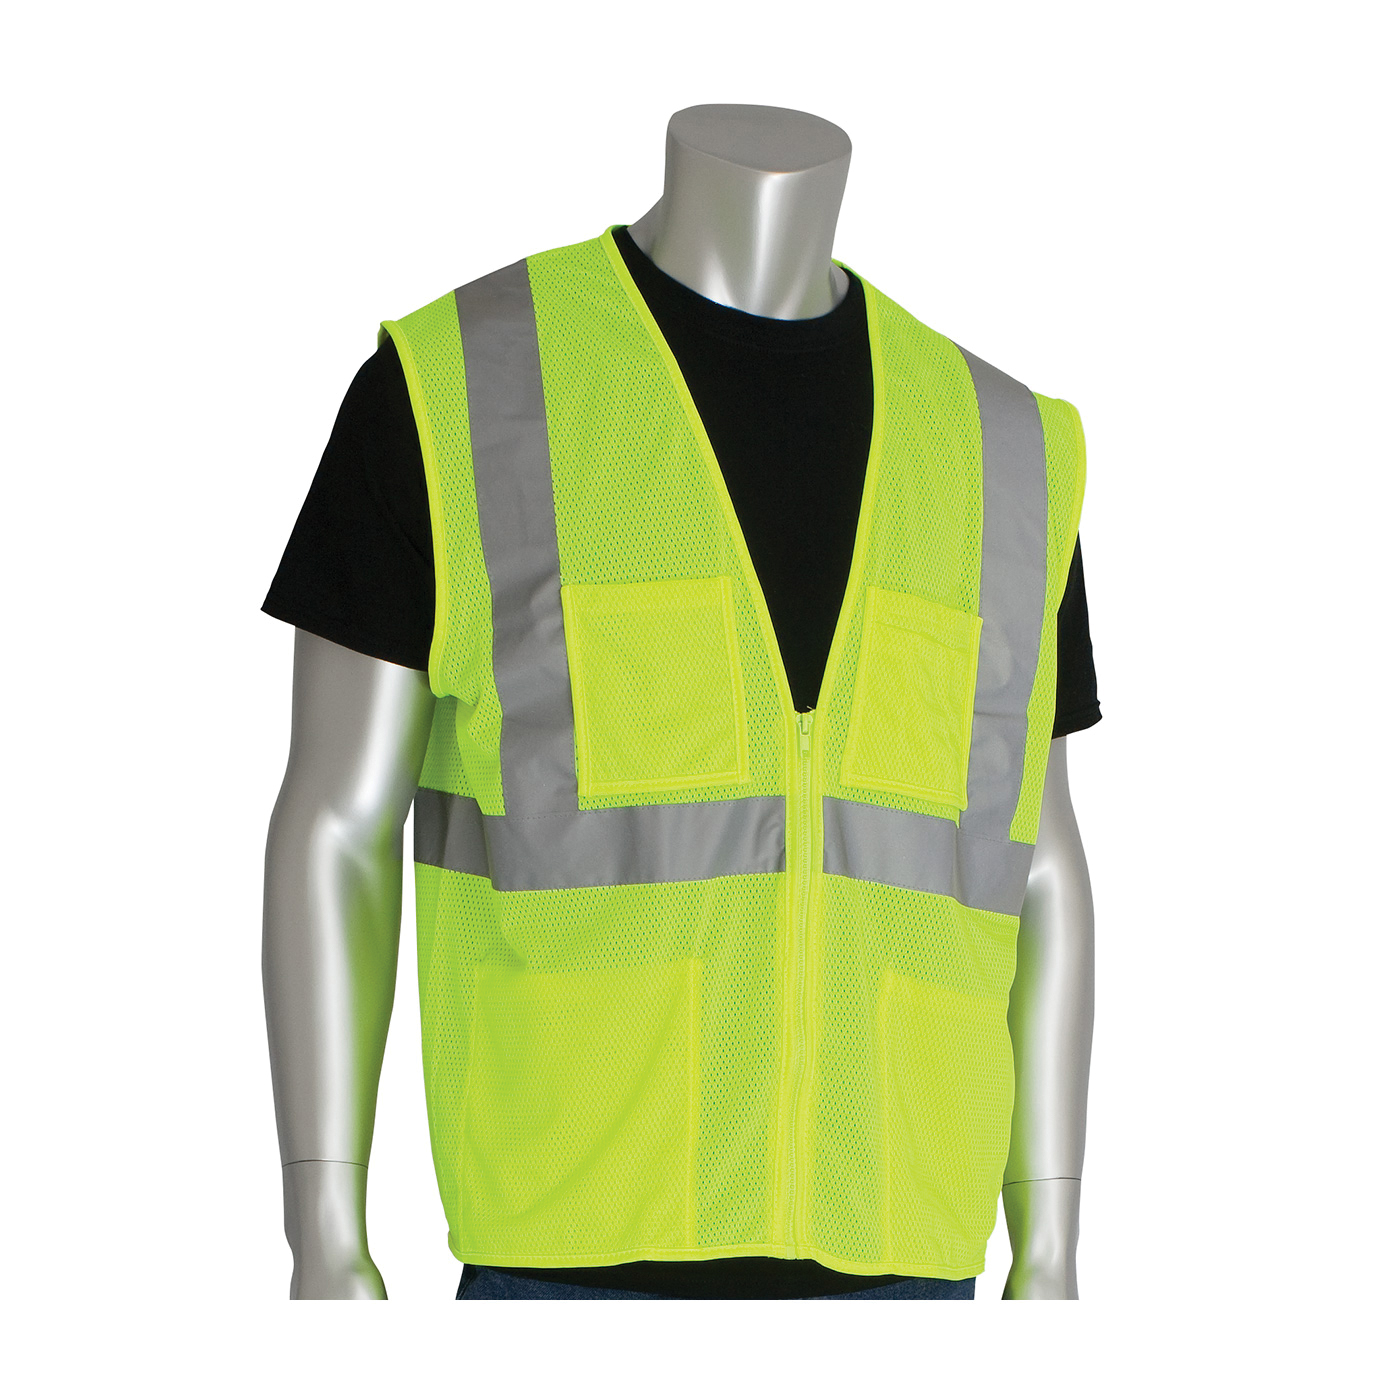 PIP® 302-MVGZ4PLY-4X Safety Vest, 4XL, Hi-Viz Lime Yellow, Polyester Mesh, Zipper Closure, 4 Pockets, ANSI Class: Class 2, Specifications Met: ANSI 107 Type R